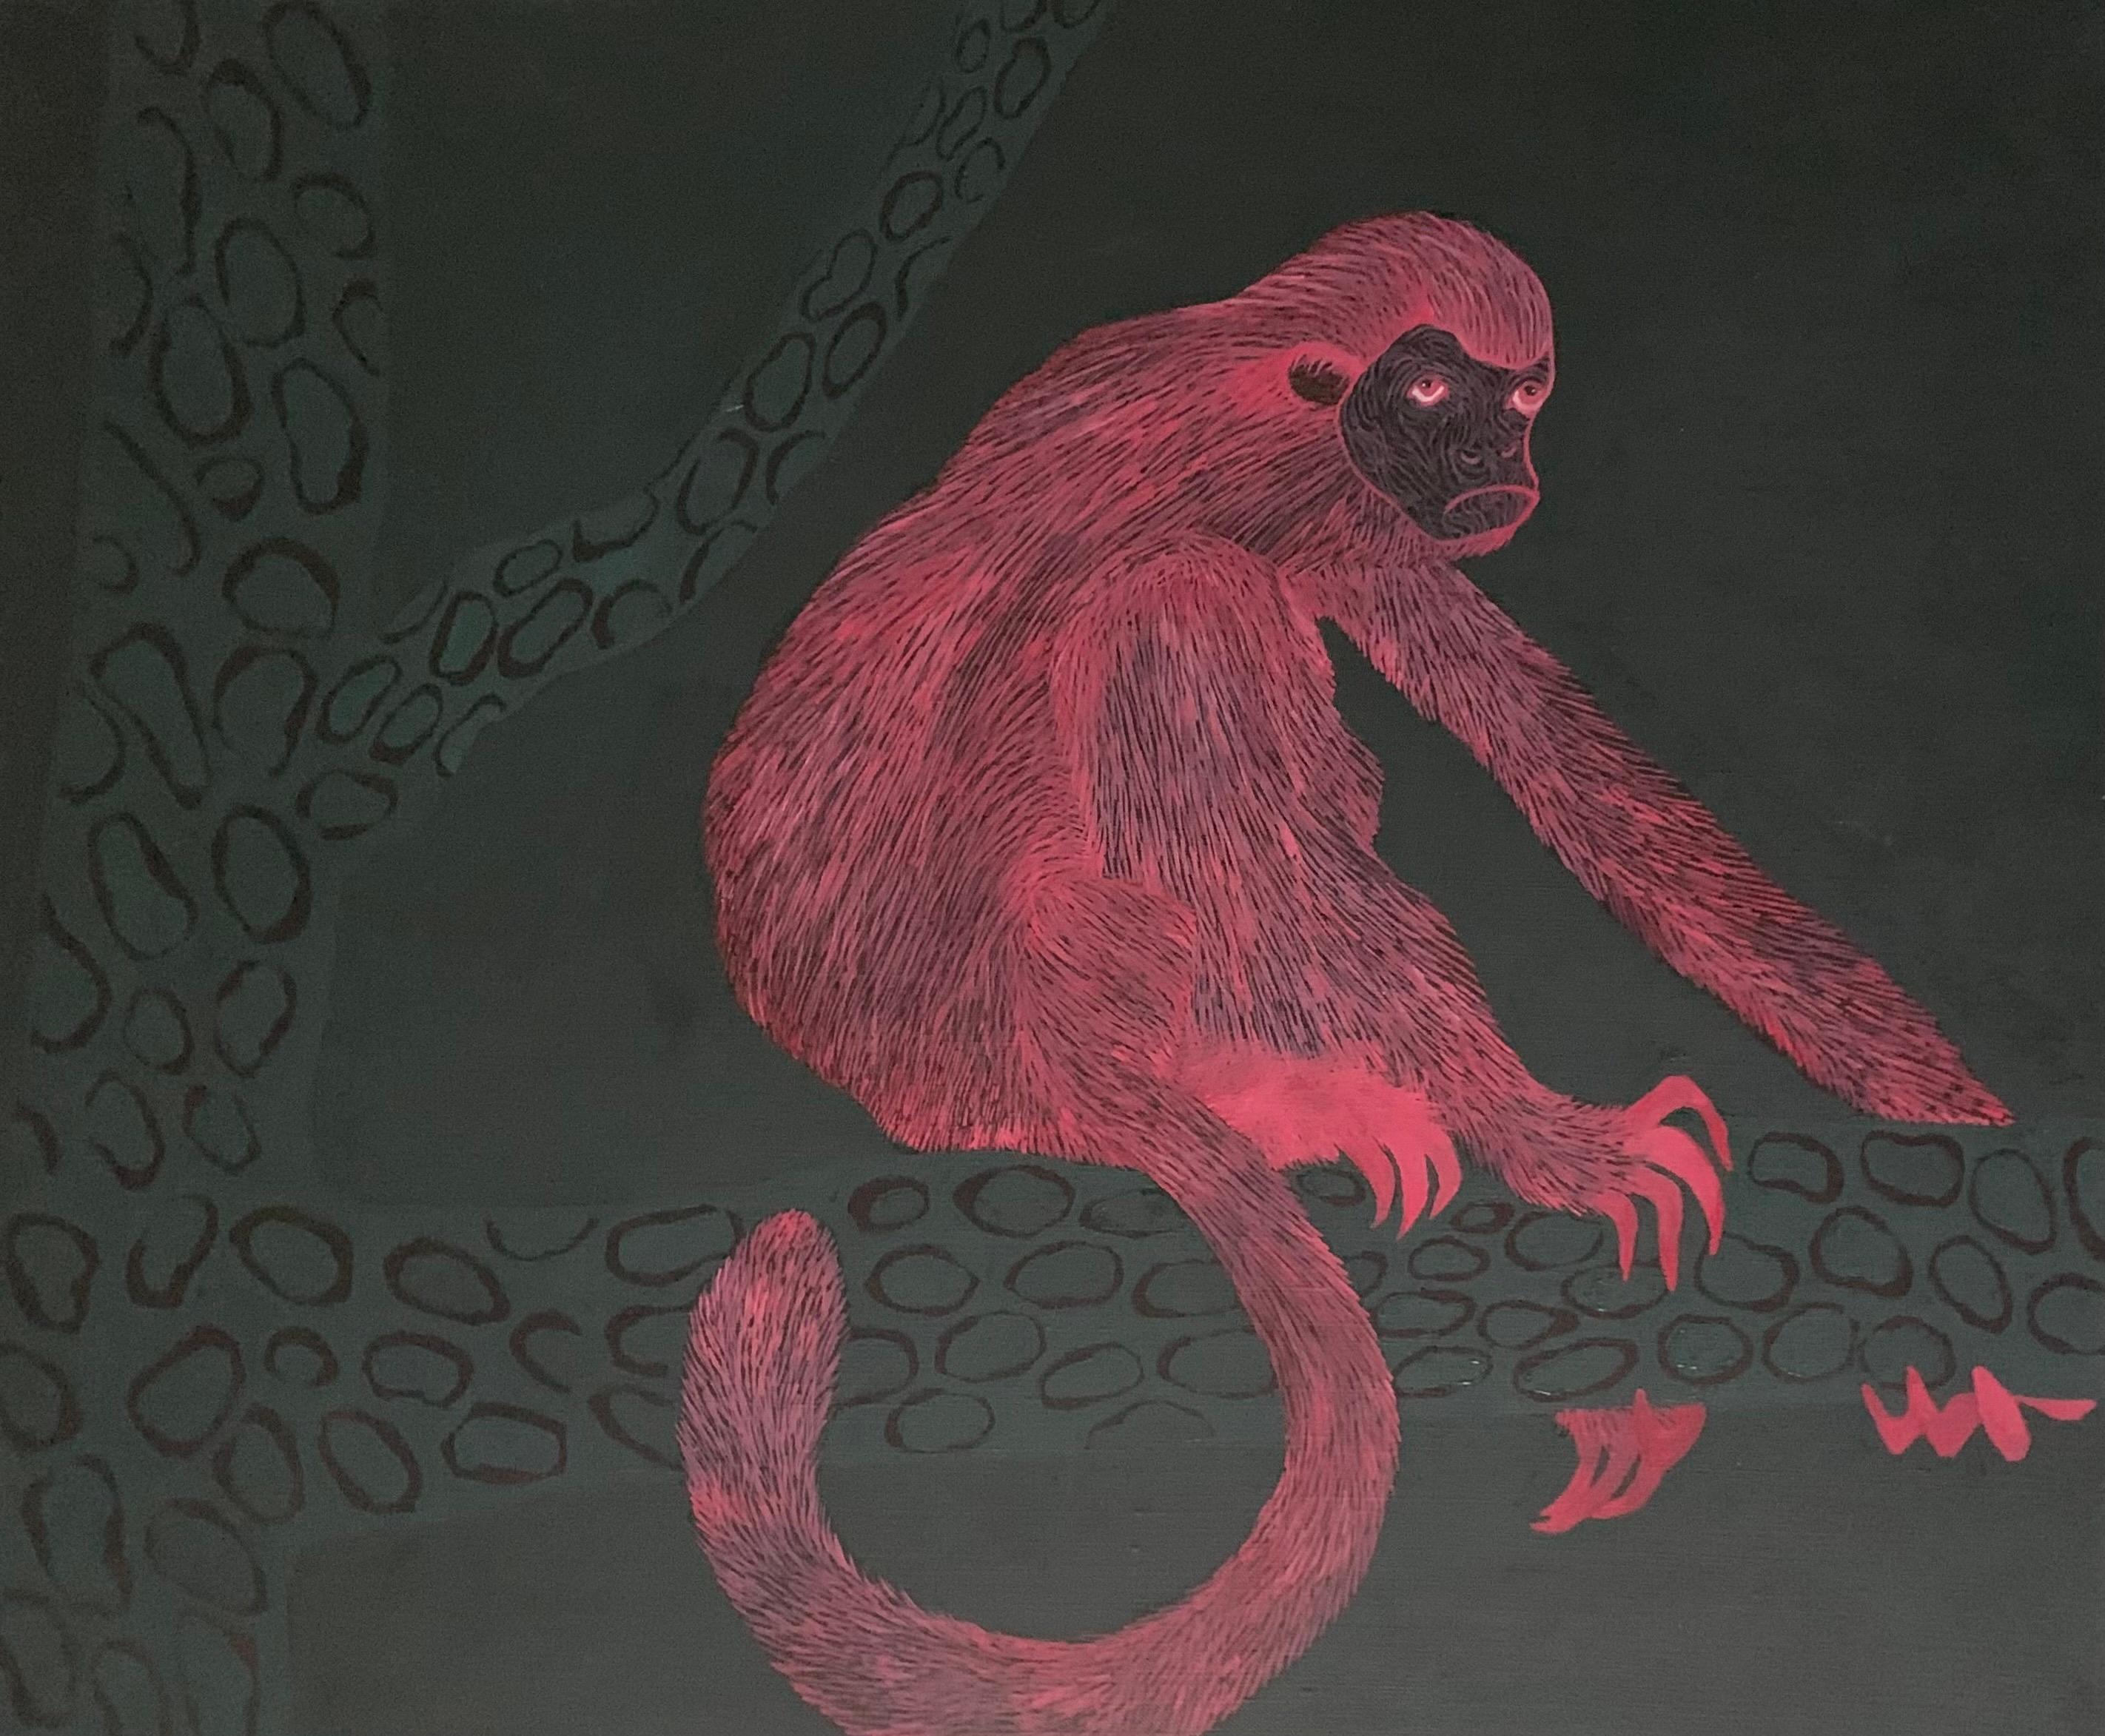 Aleksandra Bujnowska Landscape Painting - The Pink Monkey - Contemporary Figurative Animals Oil Painting, Magical Realism